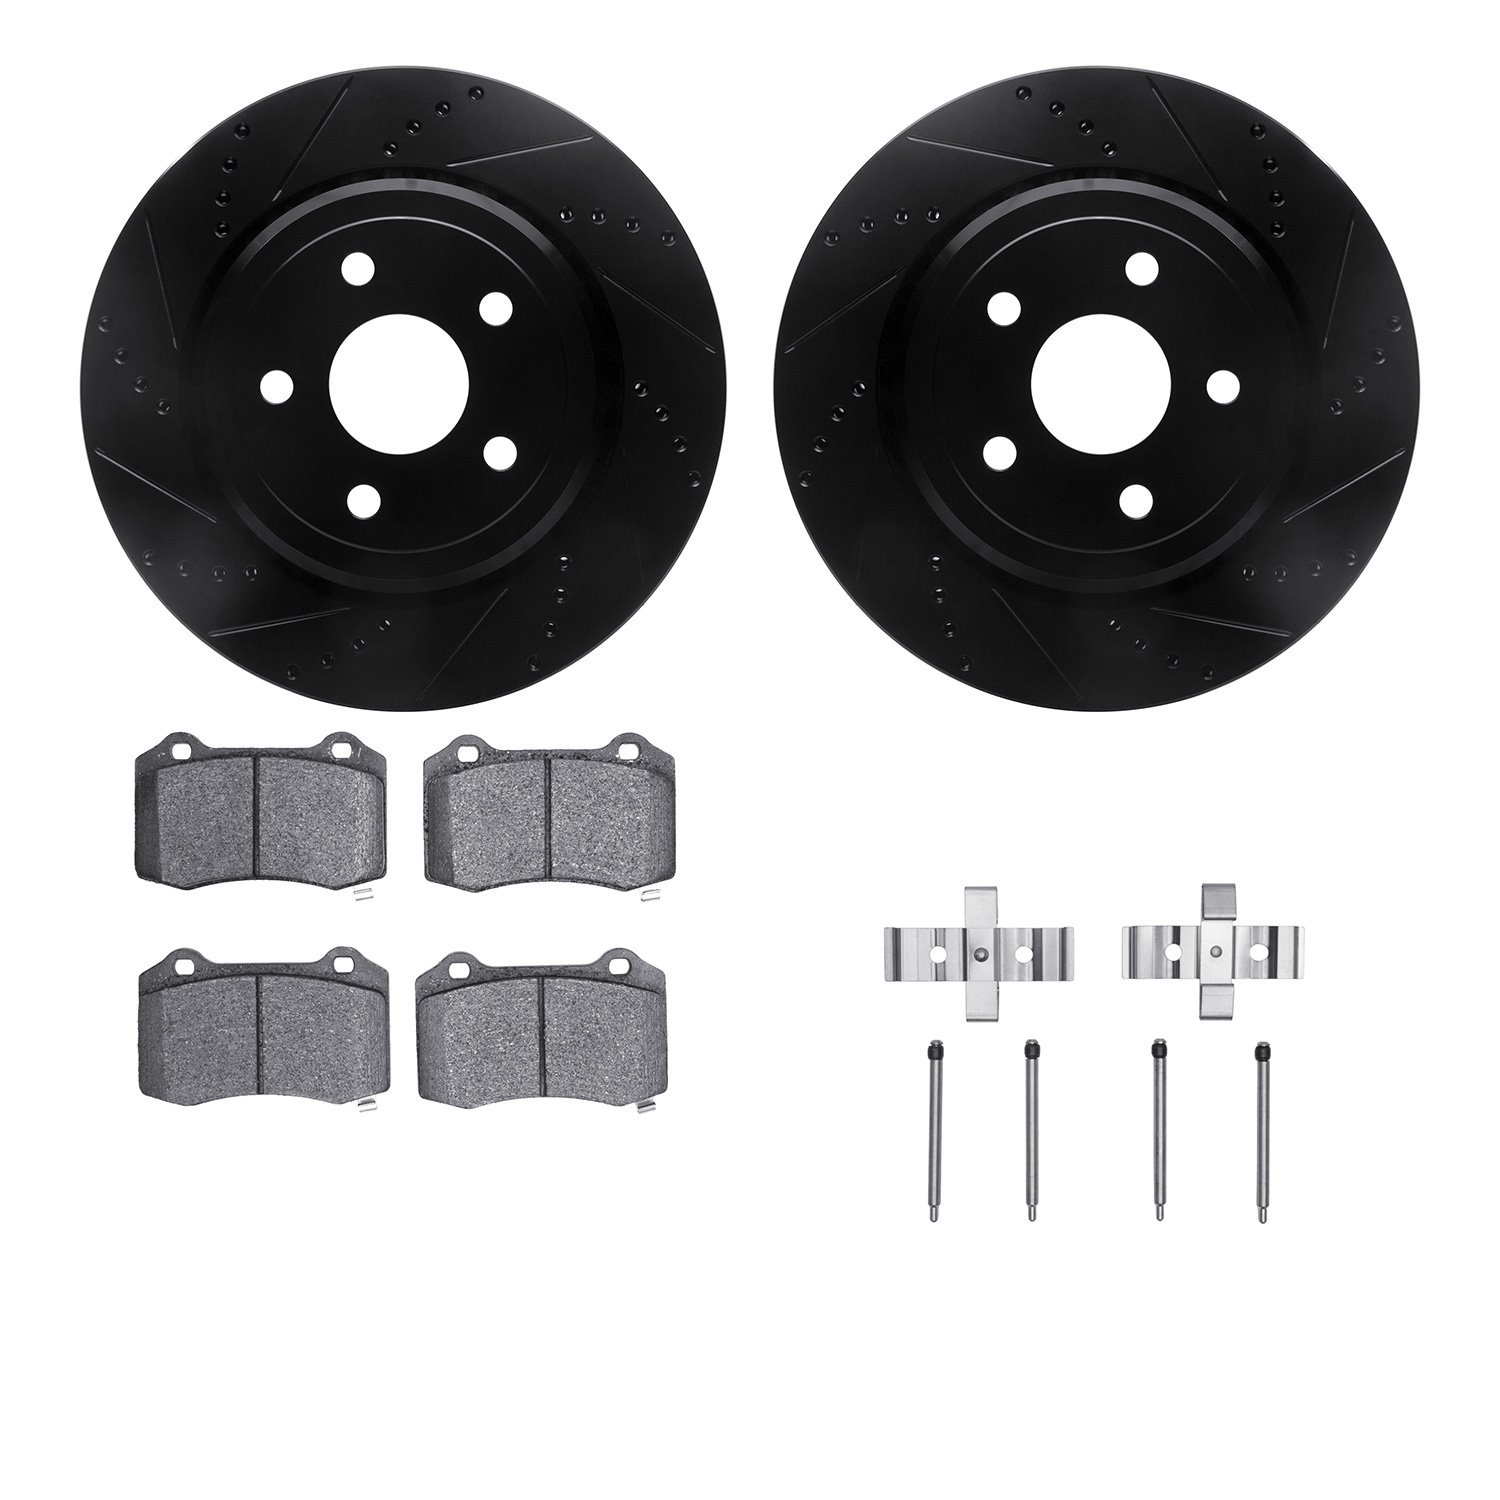 8312-42025 Drilled/Slotted Brake Rotors with 3000-Series Ceramic Brake Pads Kit & Hardware [Black], Fits Select Mopar, Position: